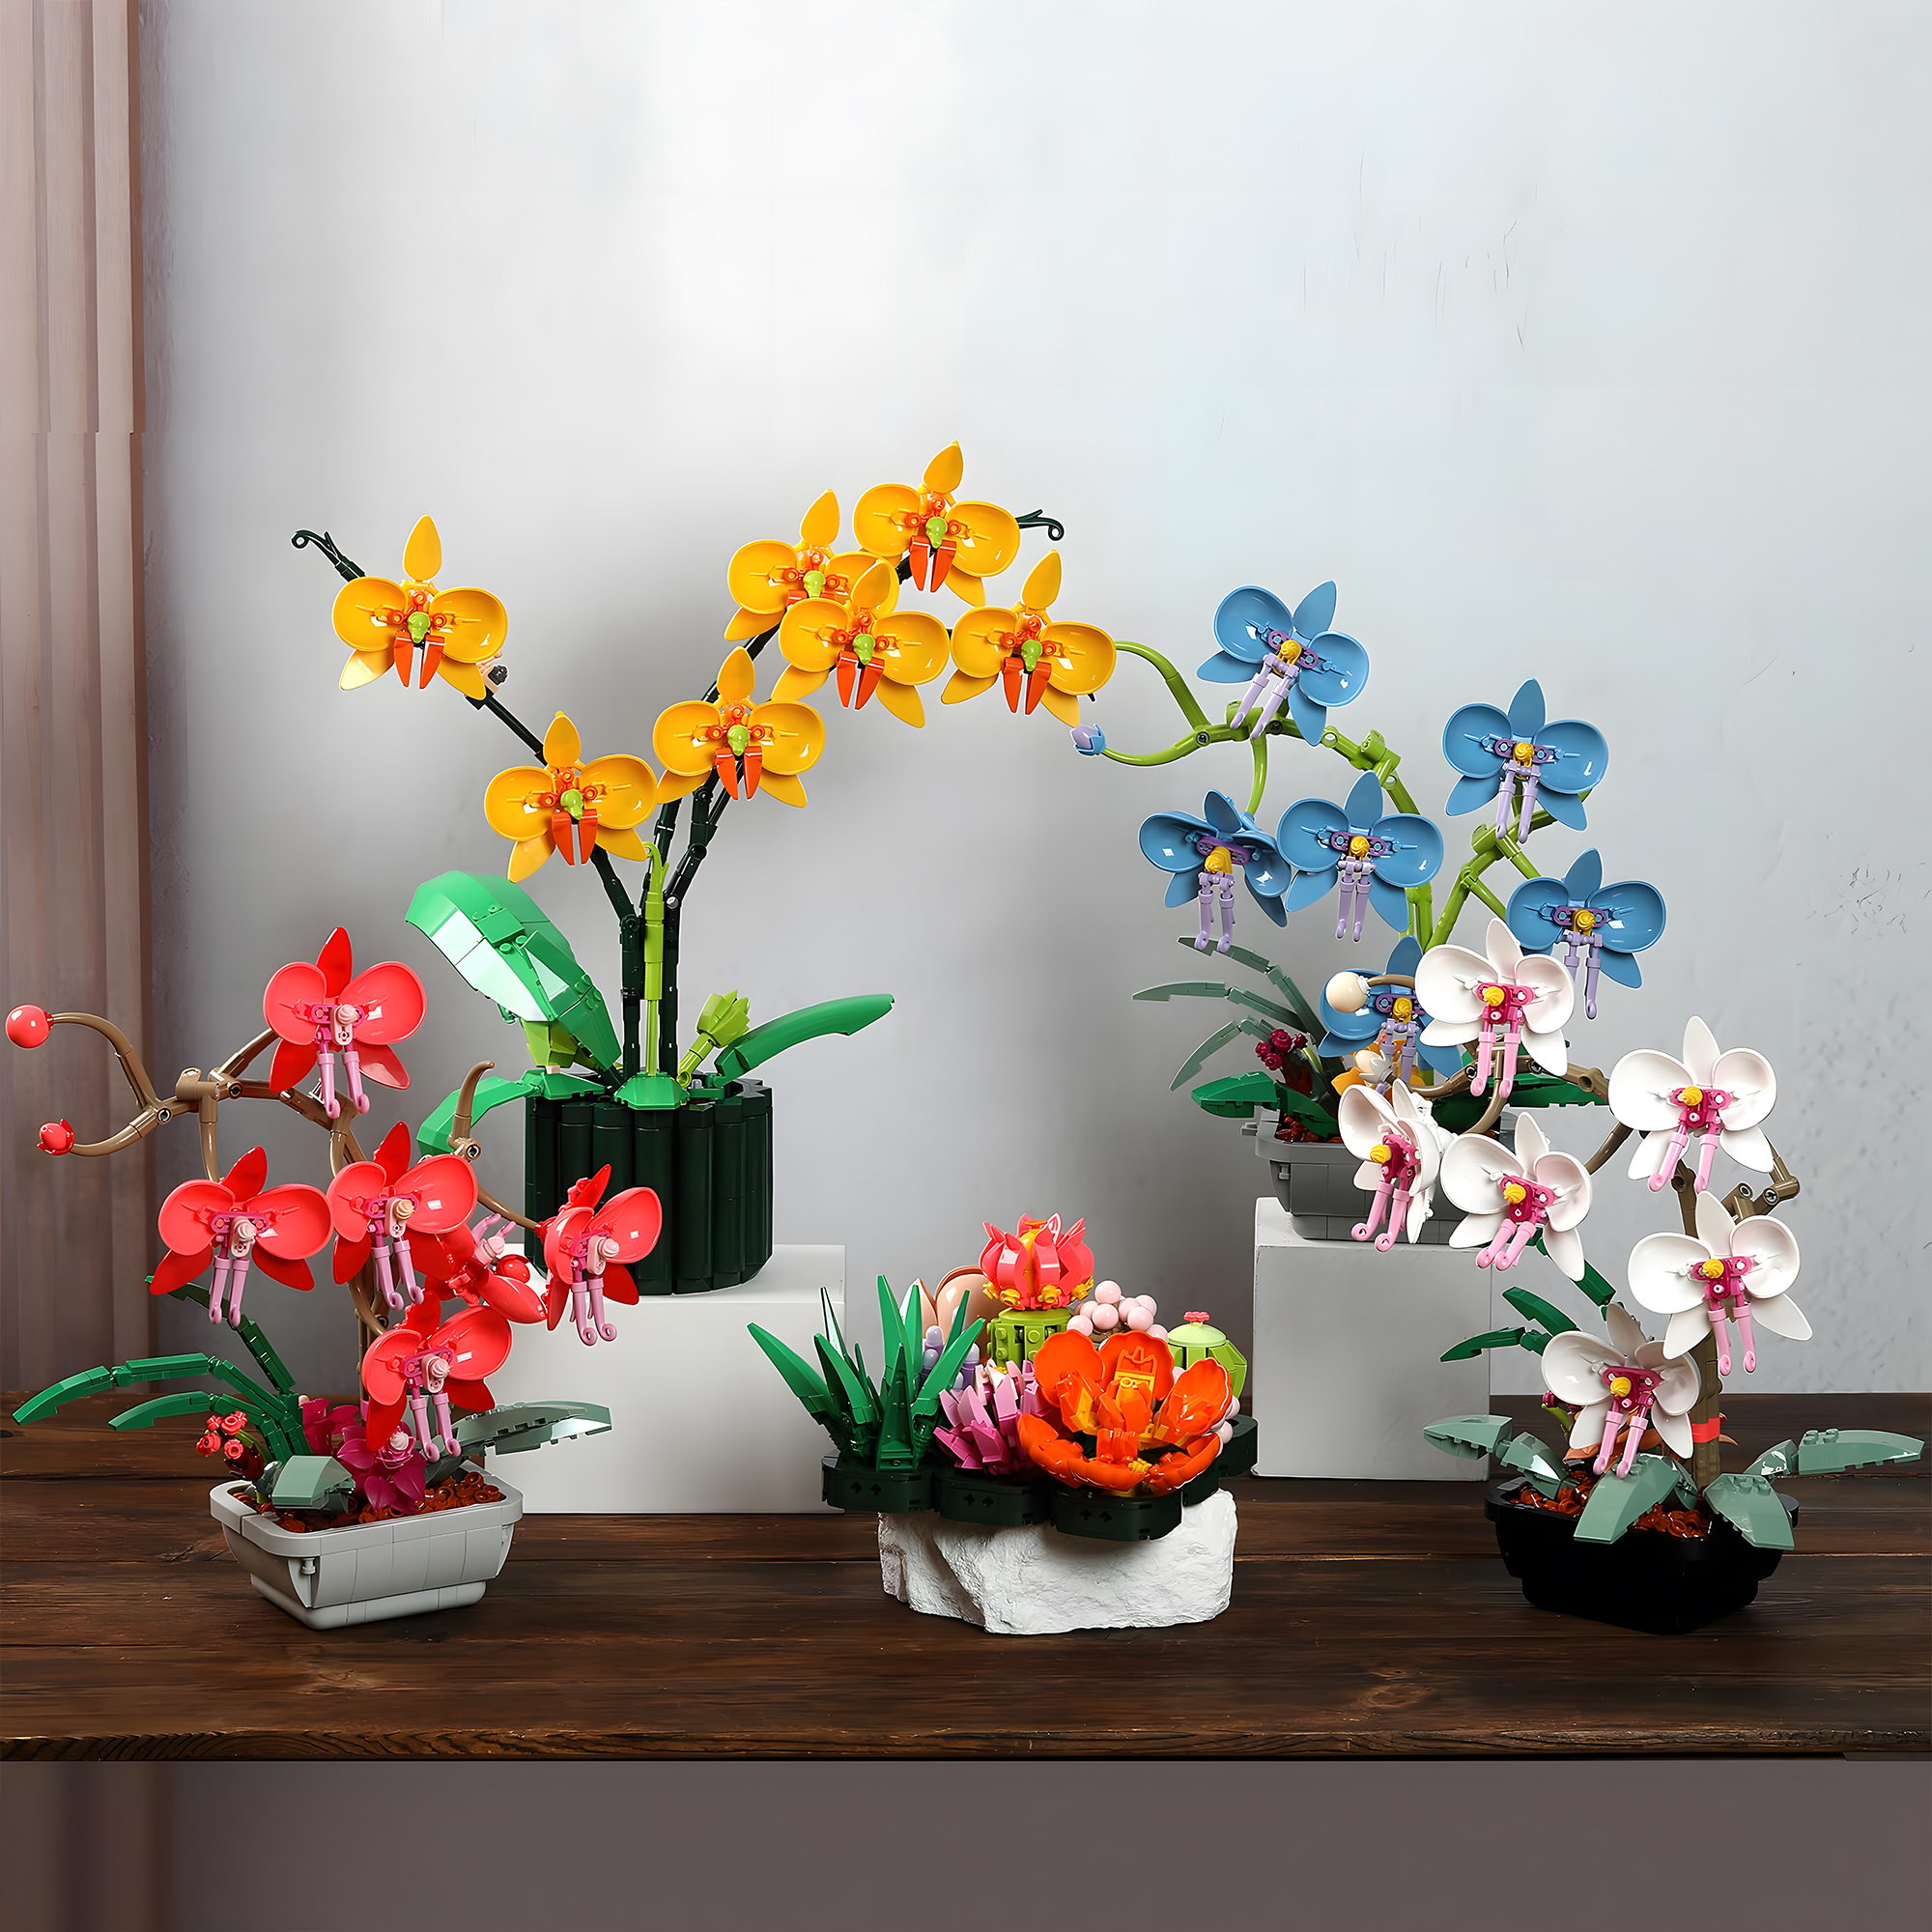 HI-Reeke Flower Building Block Set Orchid Botanical Bonsai Building Kit Toy Gift for Kid Adult White - image 5 of 6